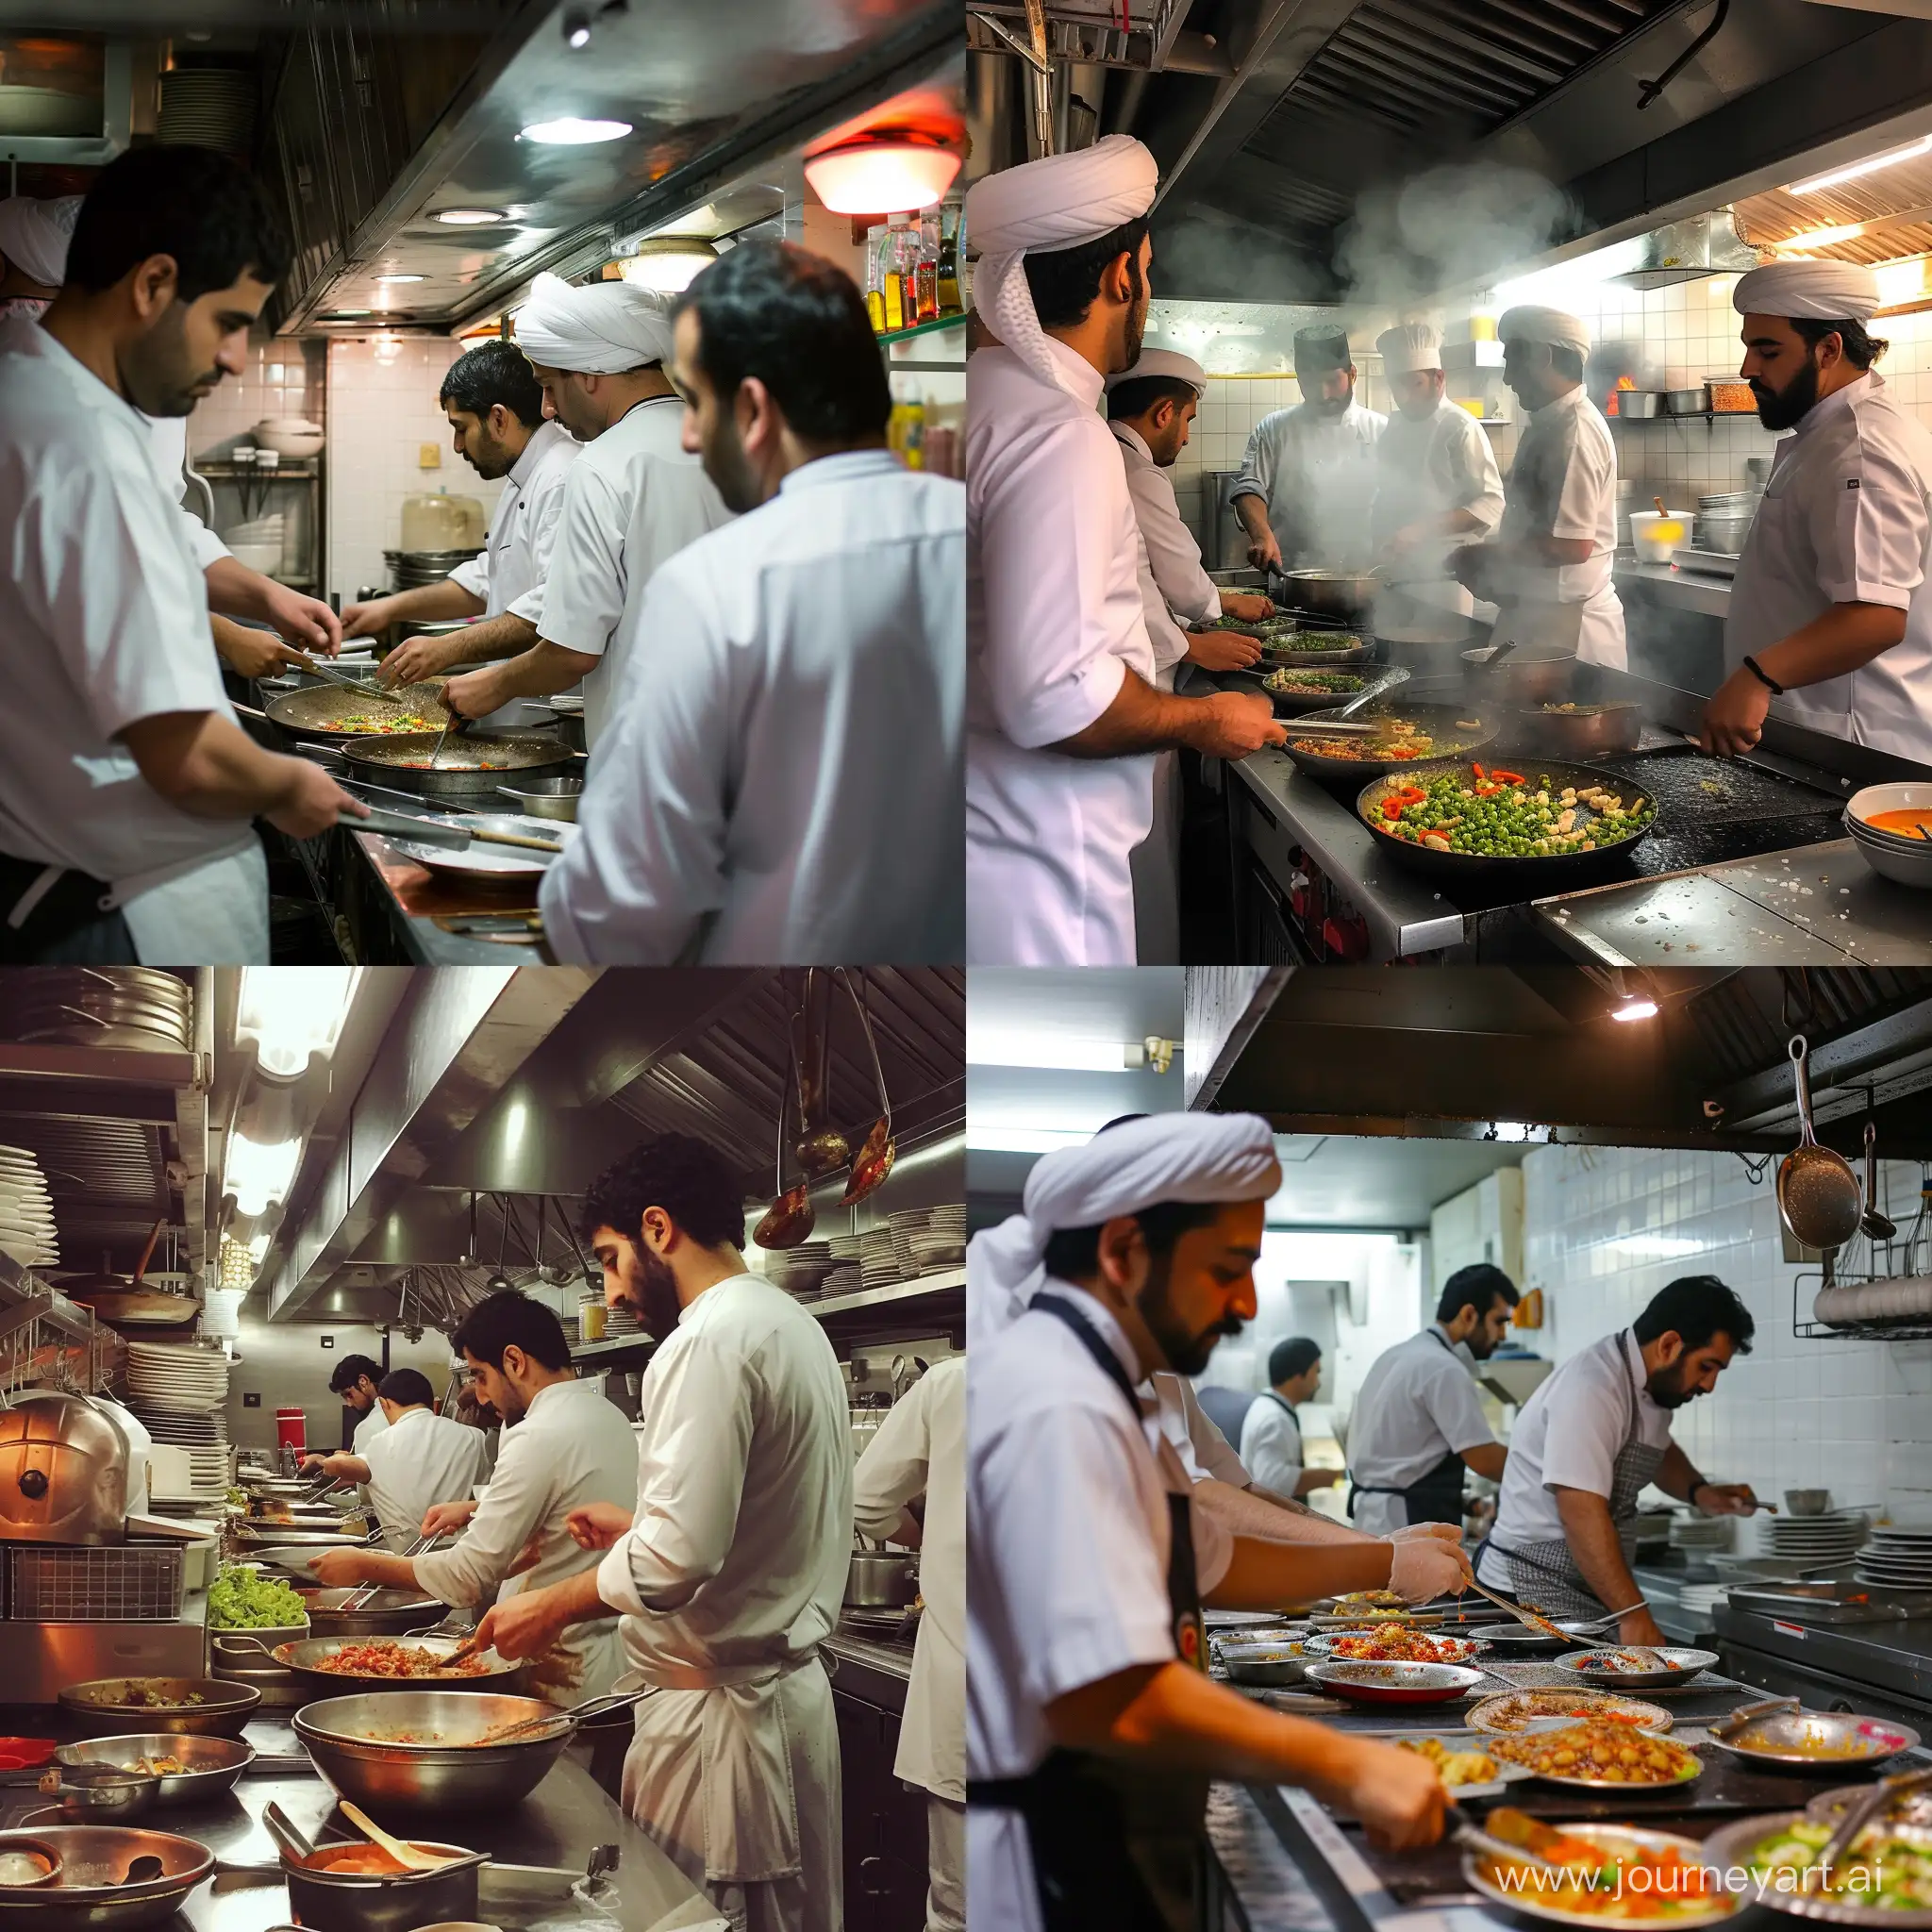 Iranian-Chefs-Cooking-in-a-Dubai-Restaurant-Kitchen